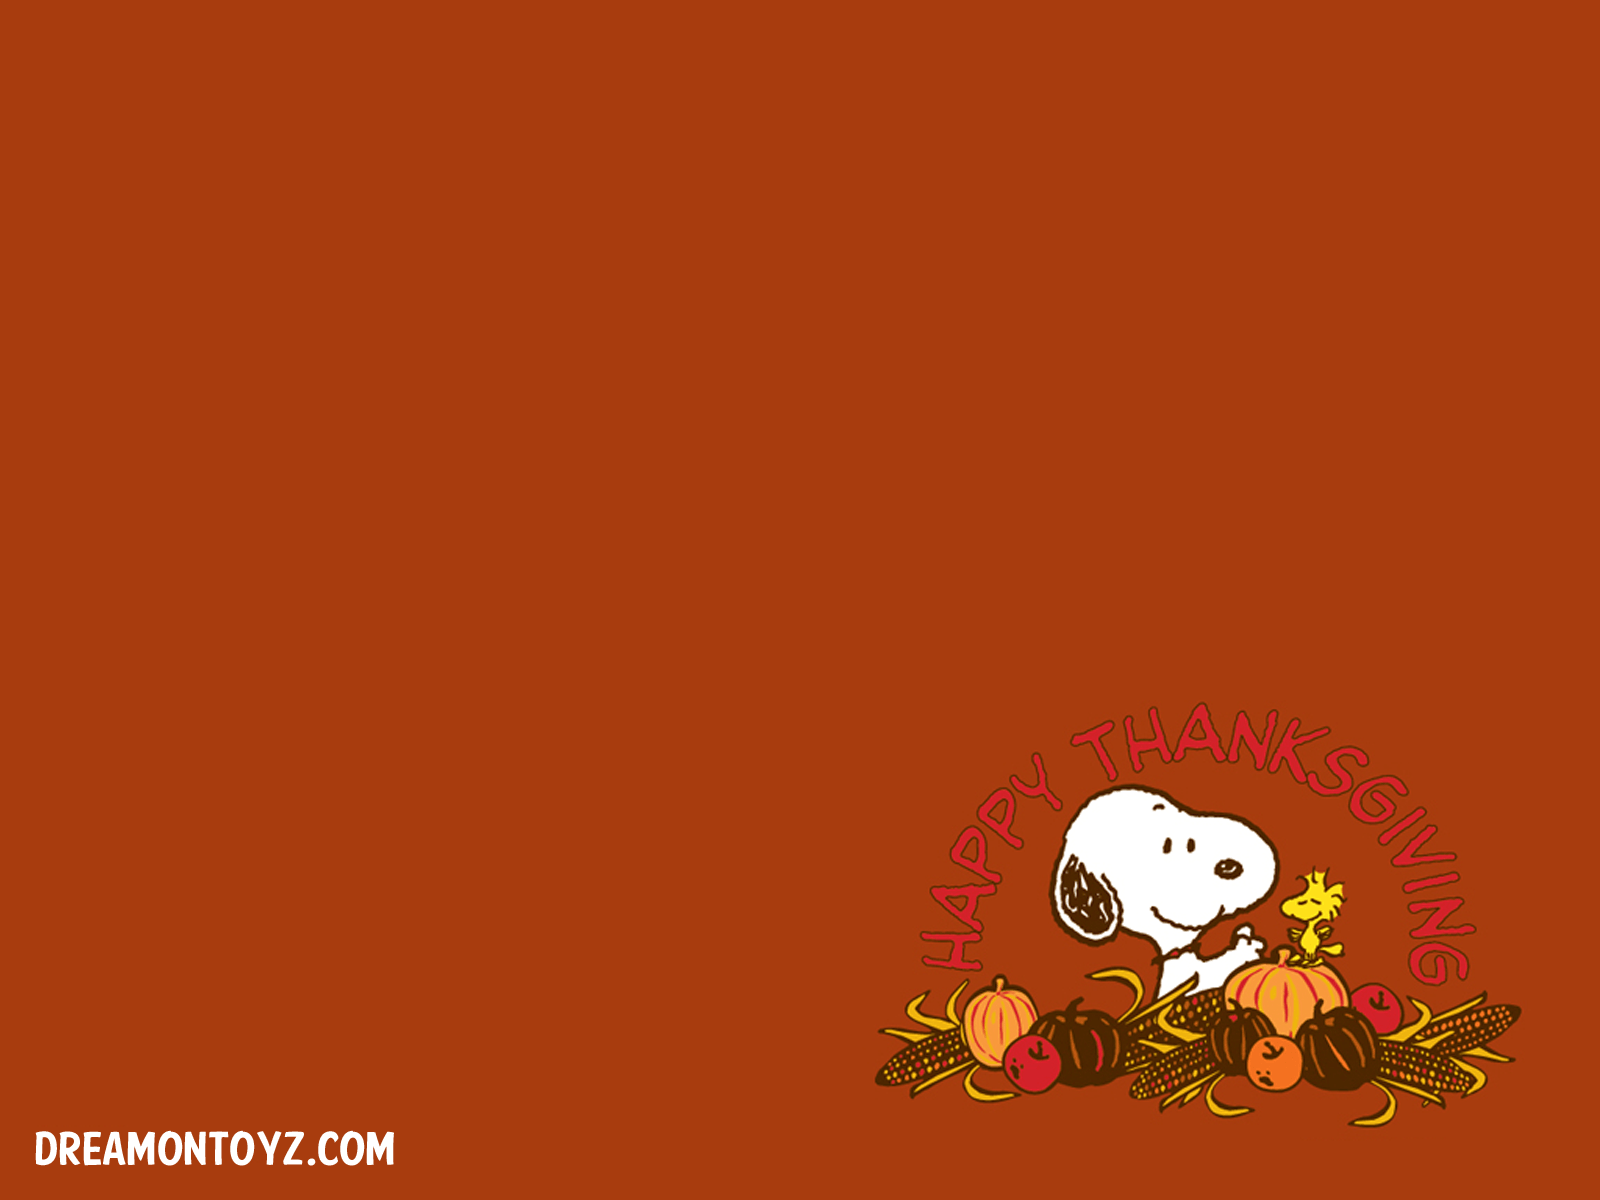 FREE Cartoon Graphics / Pics / Gifs / Photographs: Peanuts Snoopy Thanksgiving wallpaper. Snoopy wallpaper, Disney thanksgiving, Free thanksgiving wallpaper